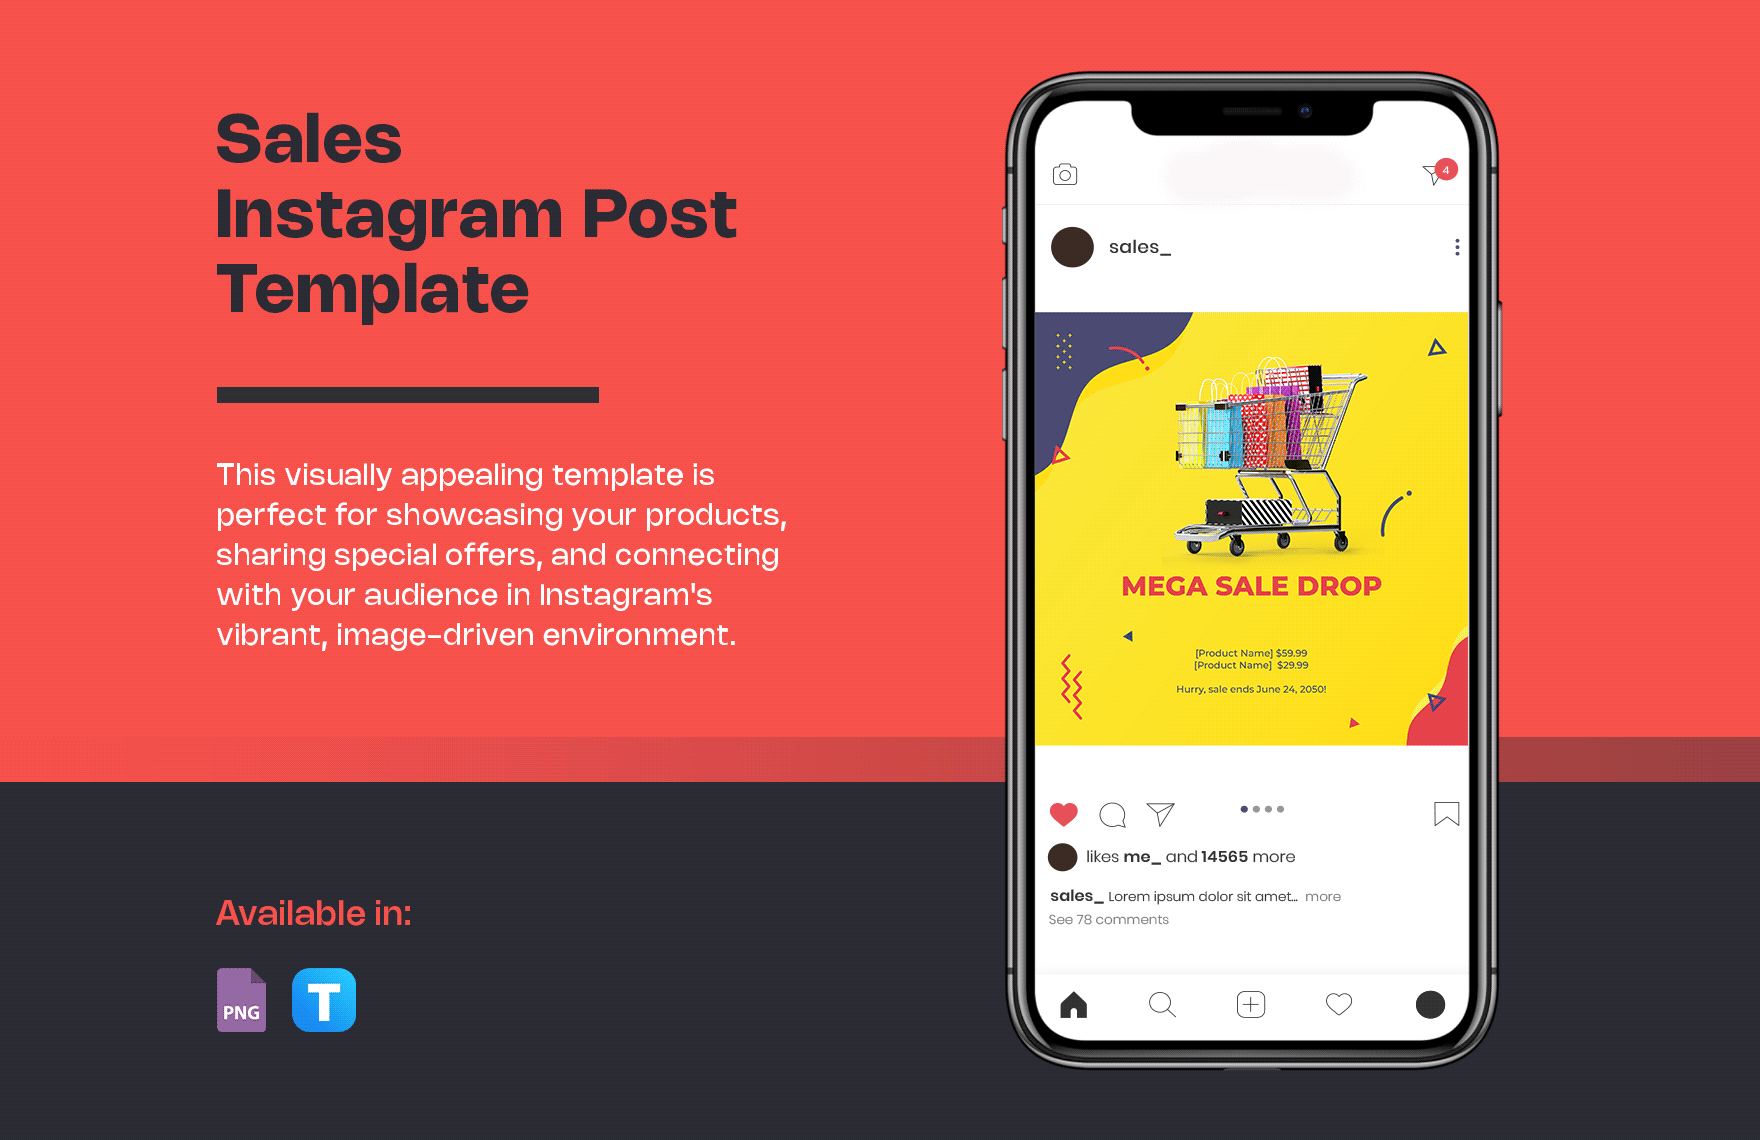 Sales Instagram Post Template